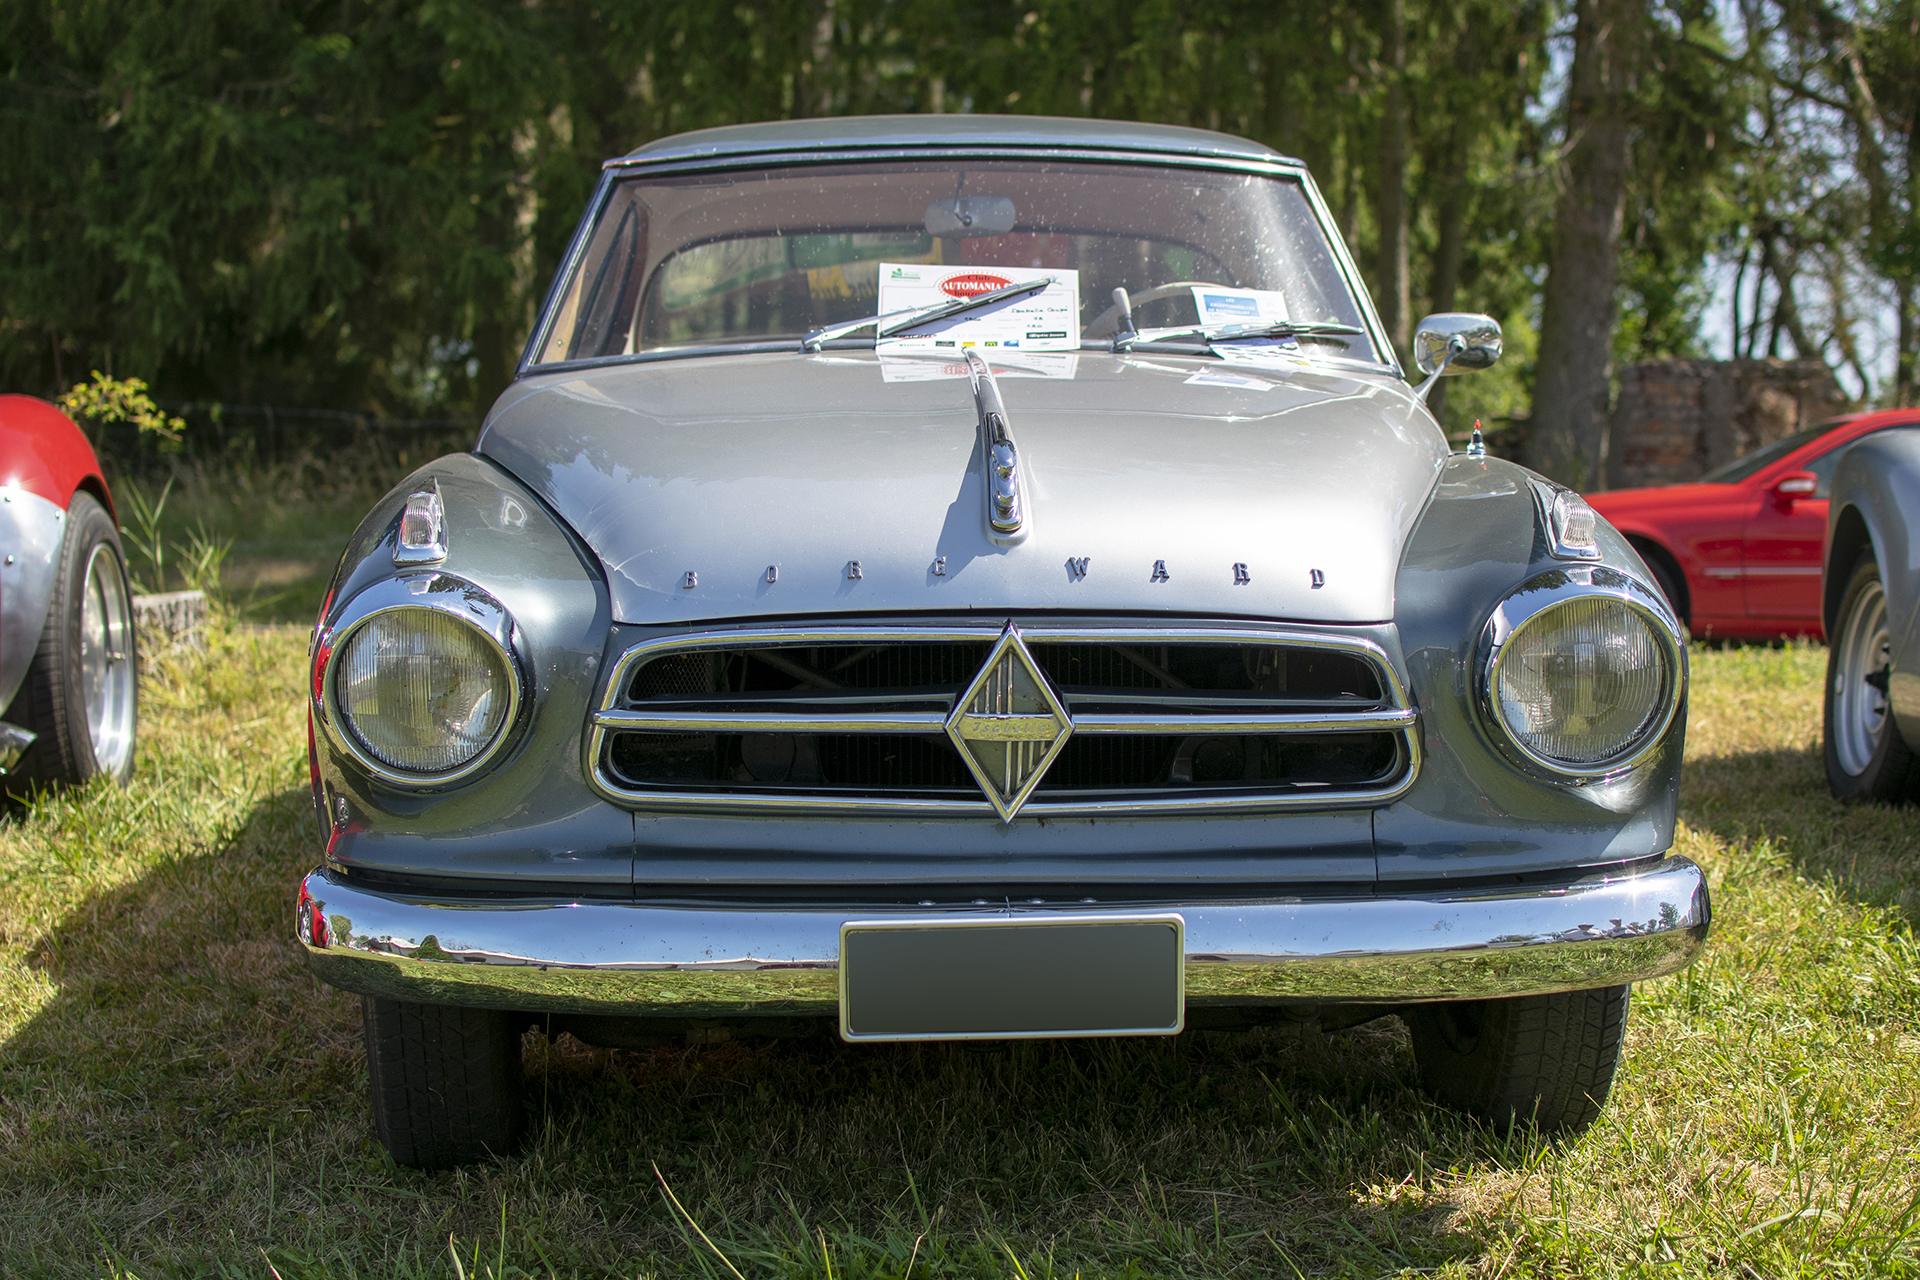 Borgward Isabella coupé 1958 front - Automania 2019, Edling les Anzeling, Hara du Moulin 